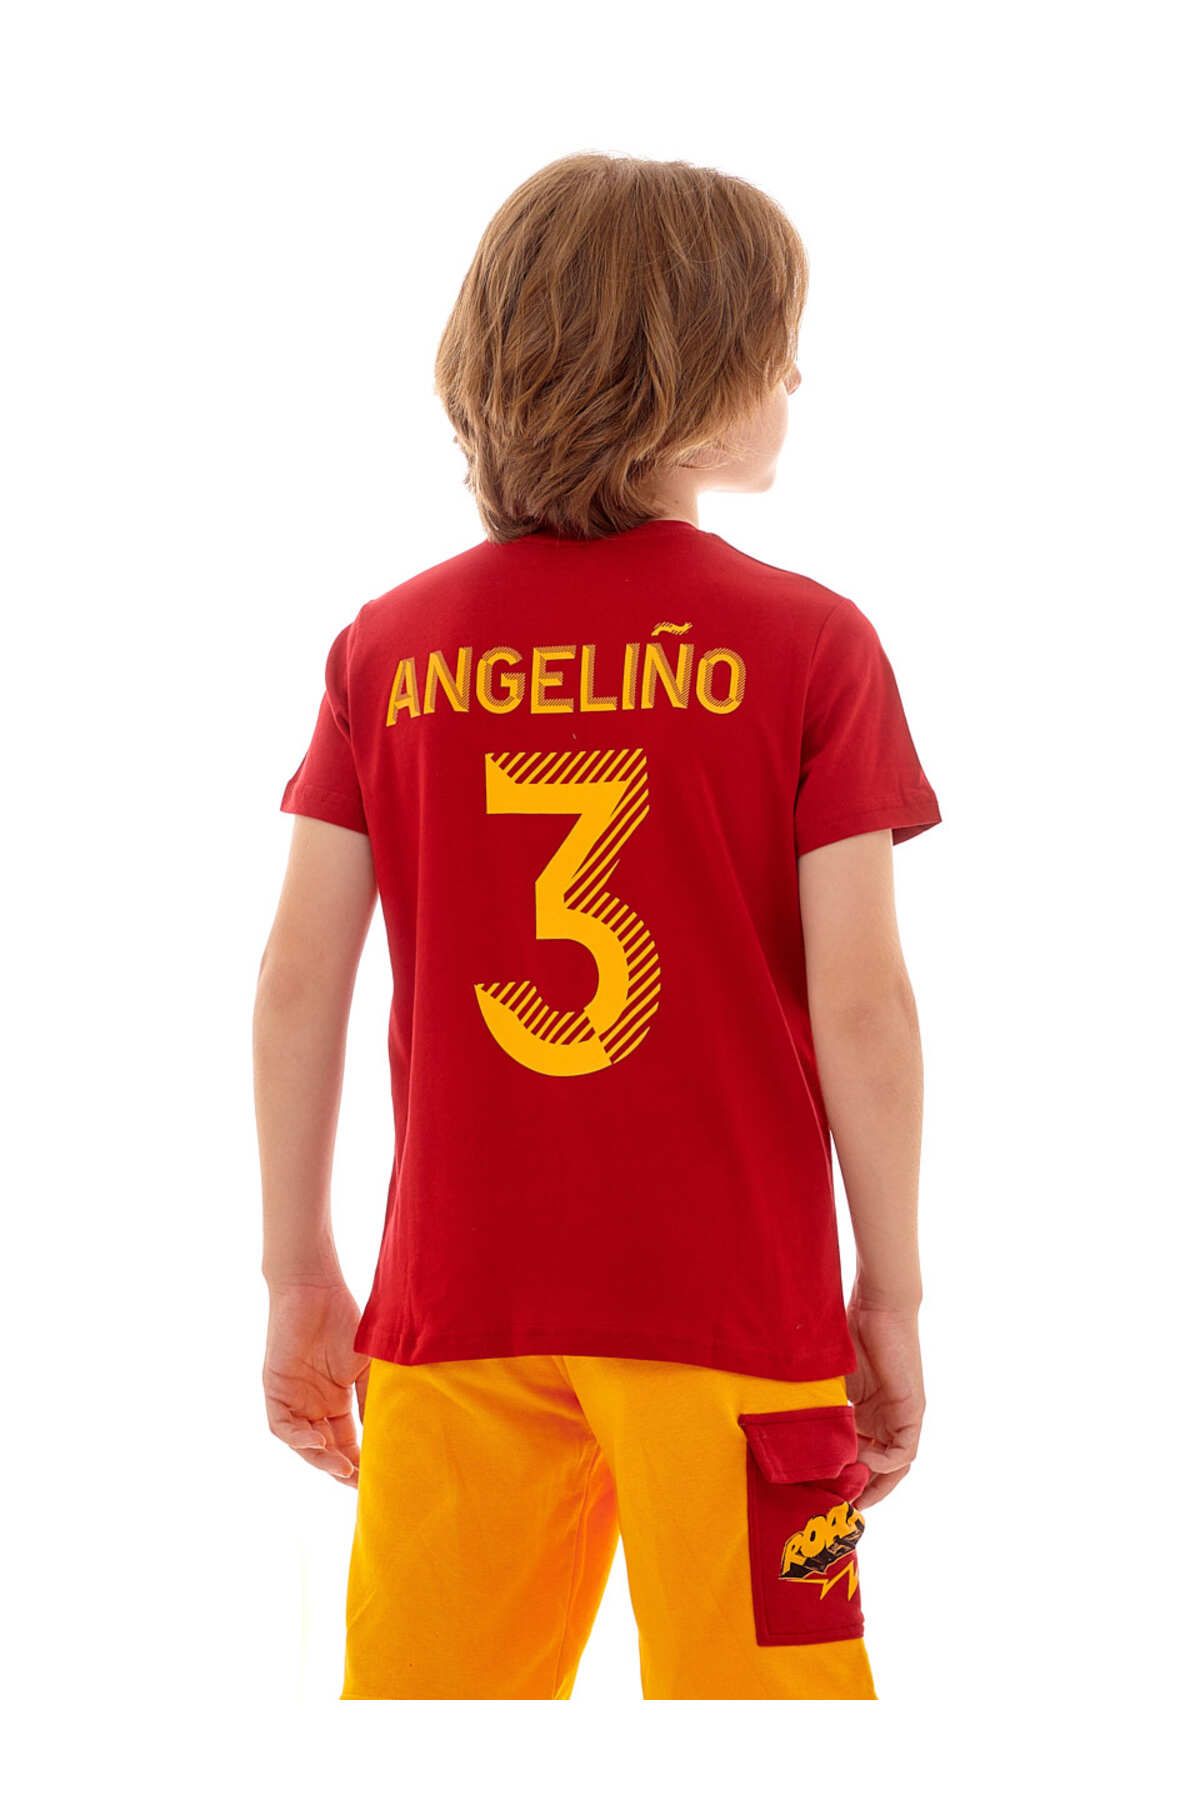 Galatasaray Galatasaray Angelino Çocuk T-shirt C231363